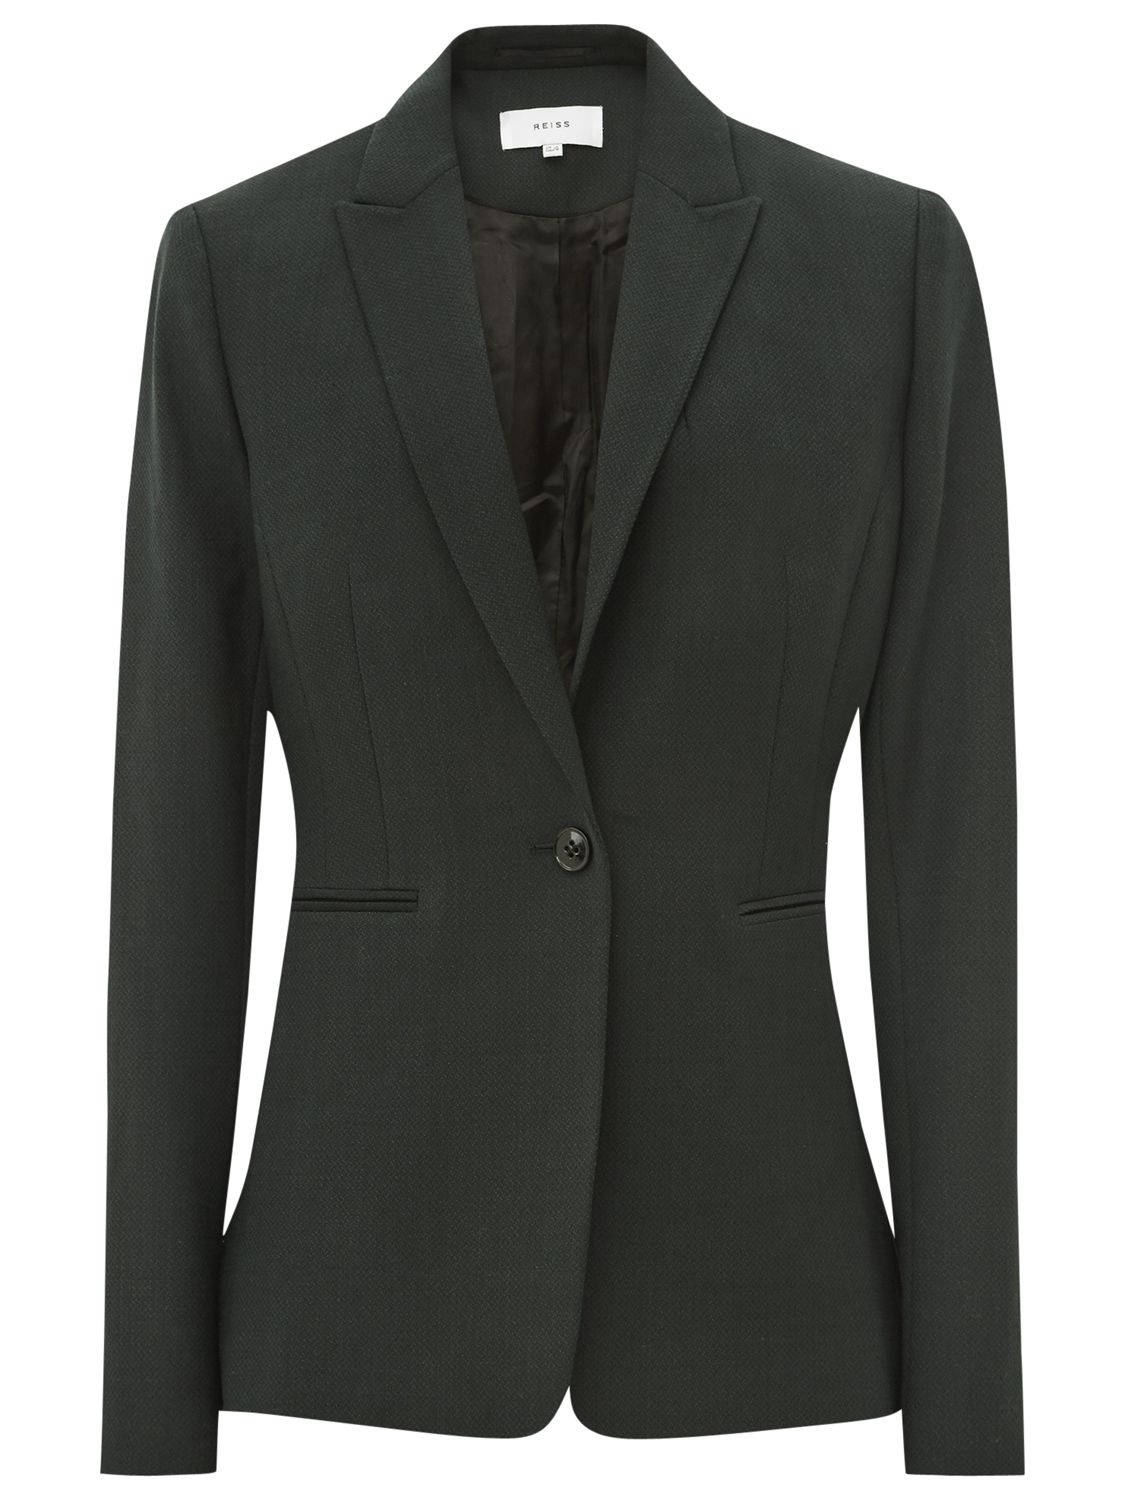 Green | Women's Coats & Jackets | John Lewis